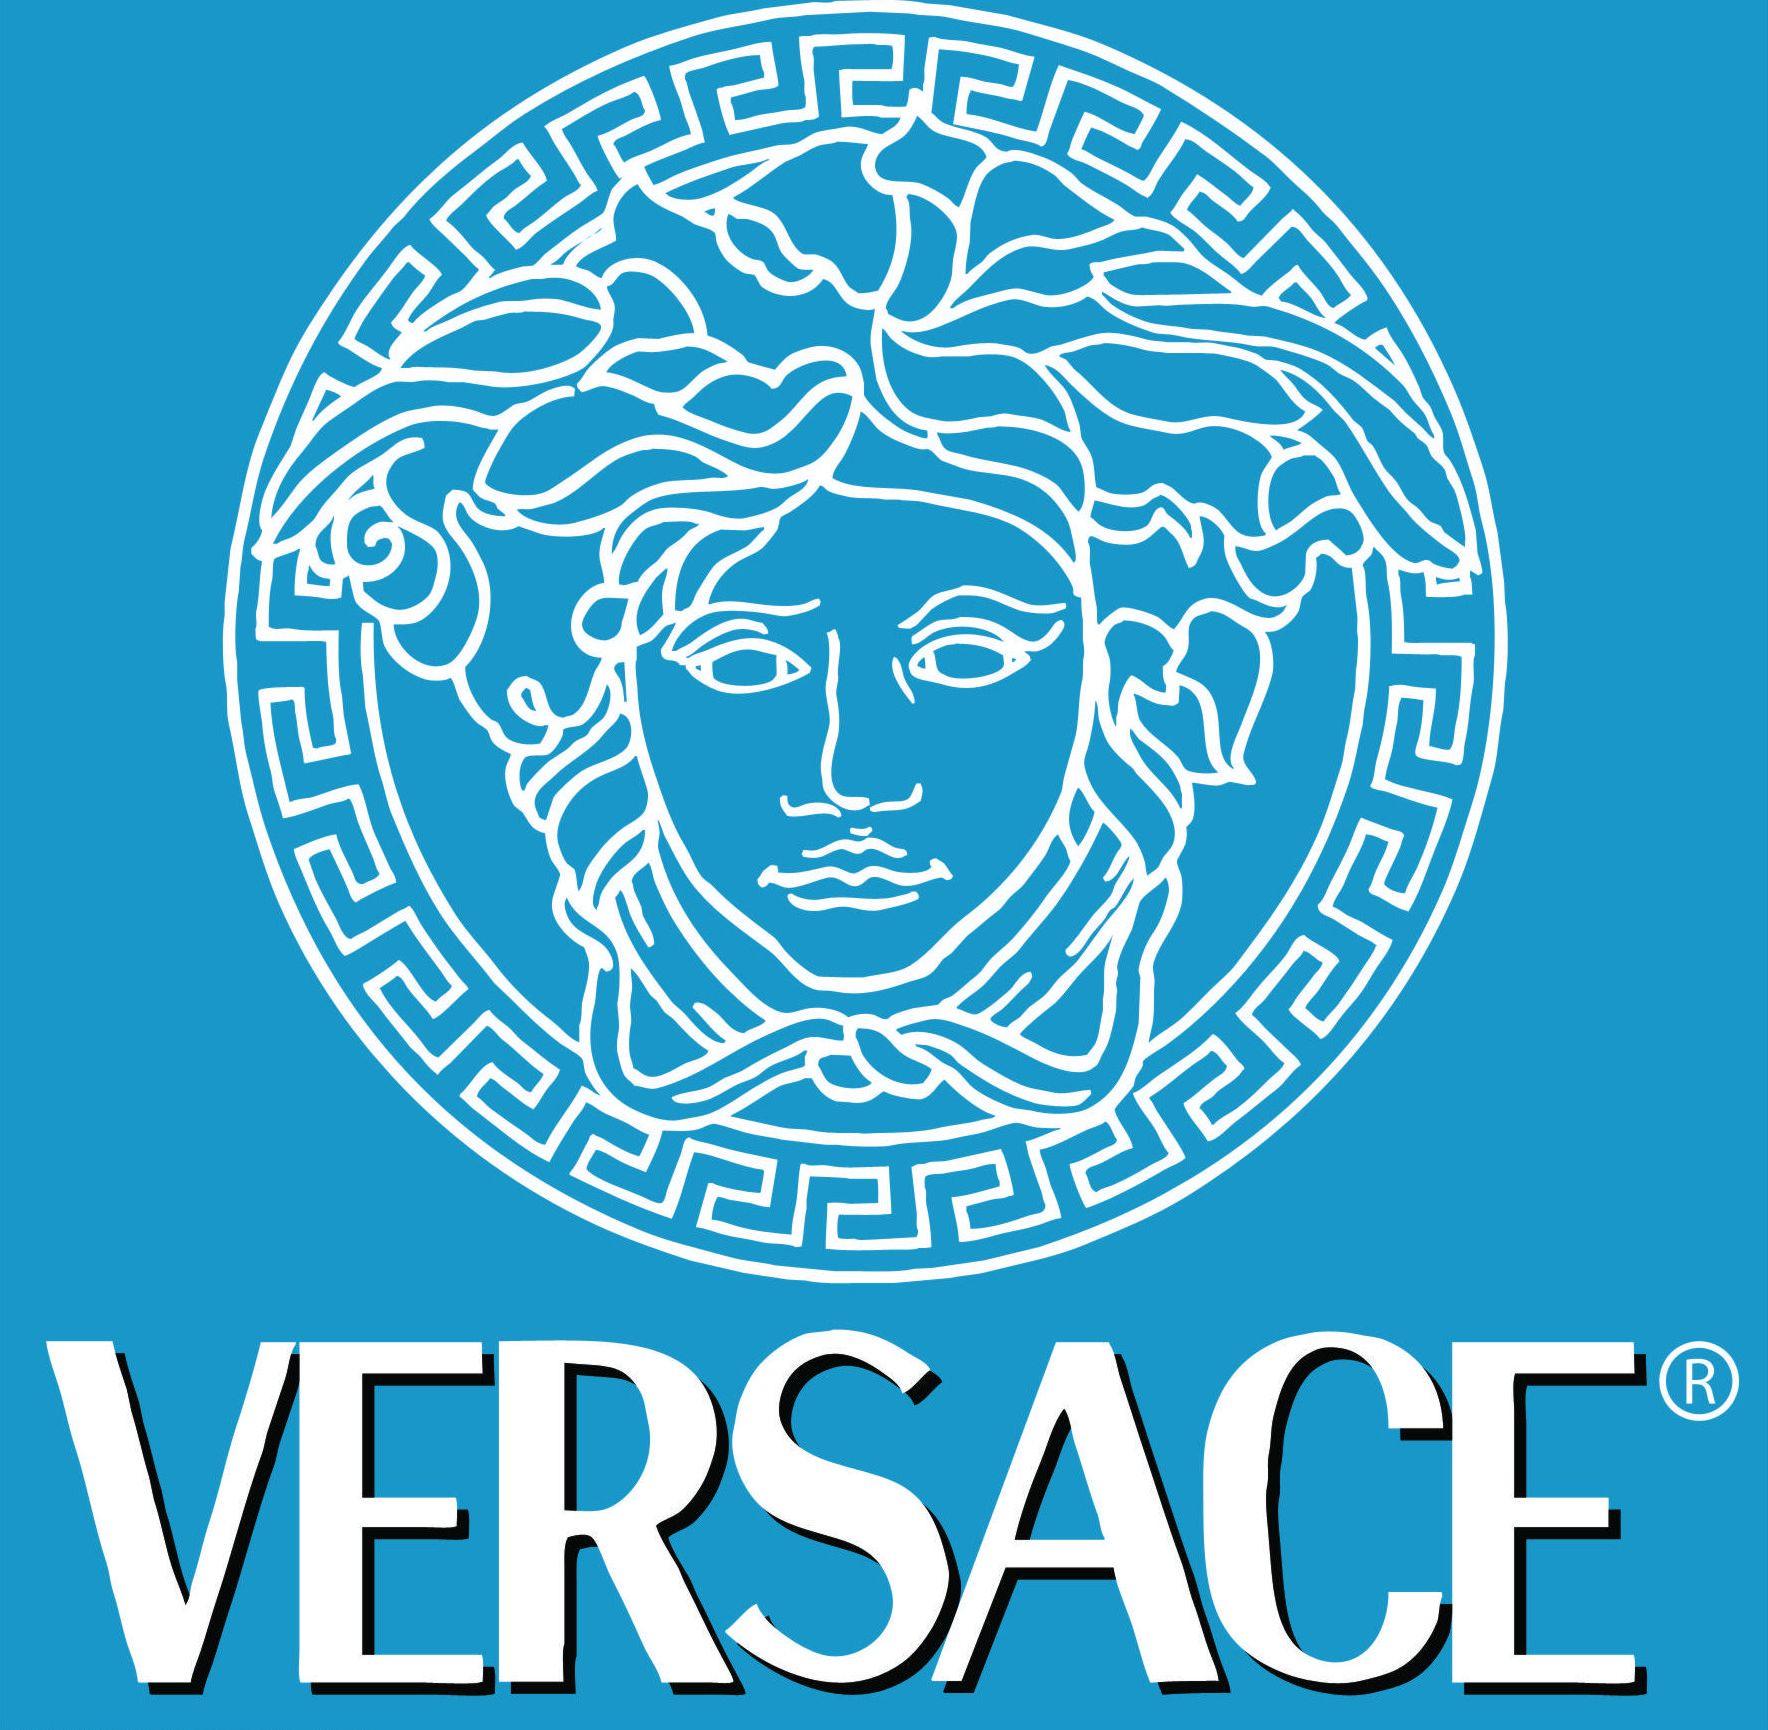 Versace Logo Wallpapers - Top Free Versace Logo Backgrounds ...